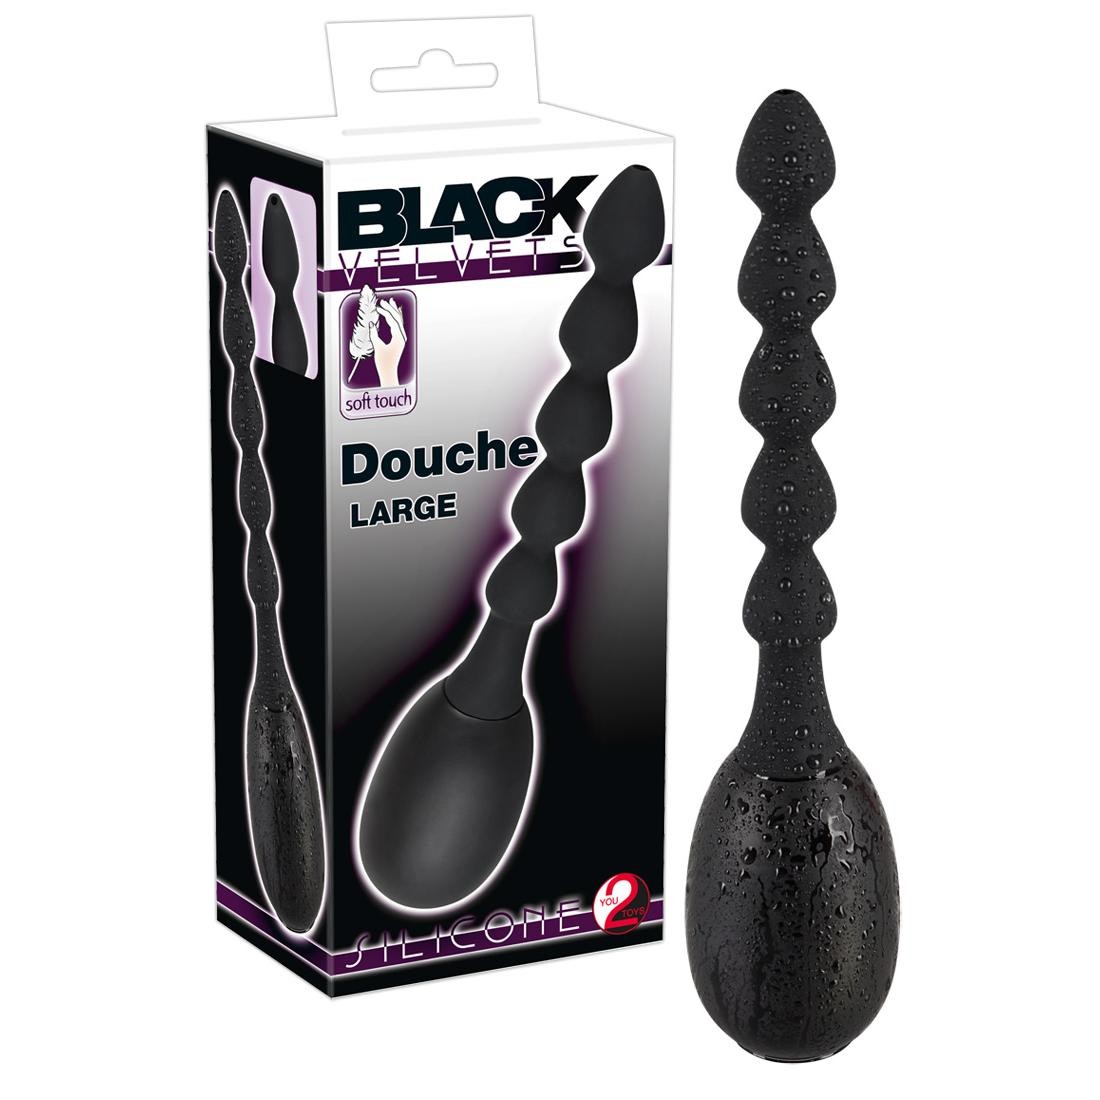  Black  Velvets  -  Black  Velvets  Douche  large  -  Intimdusche 